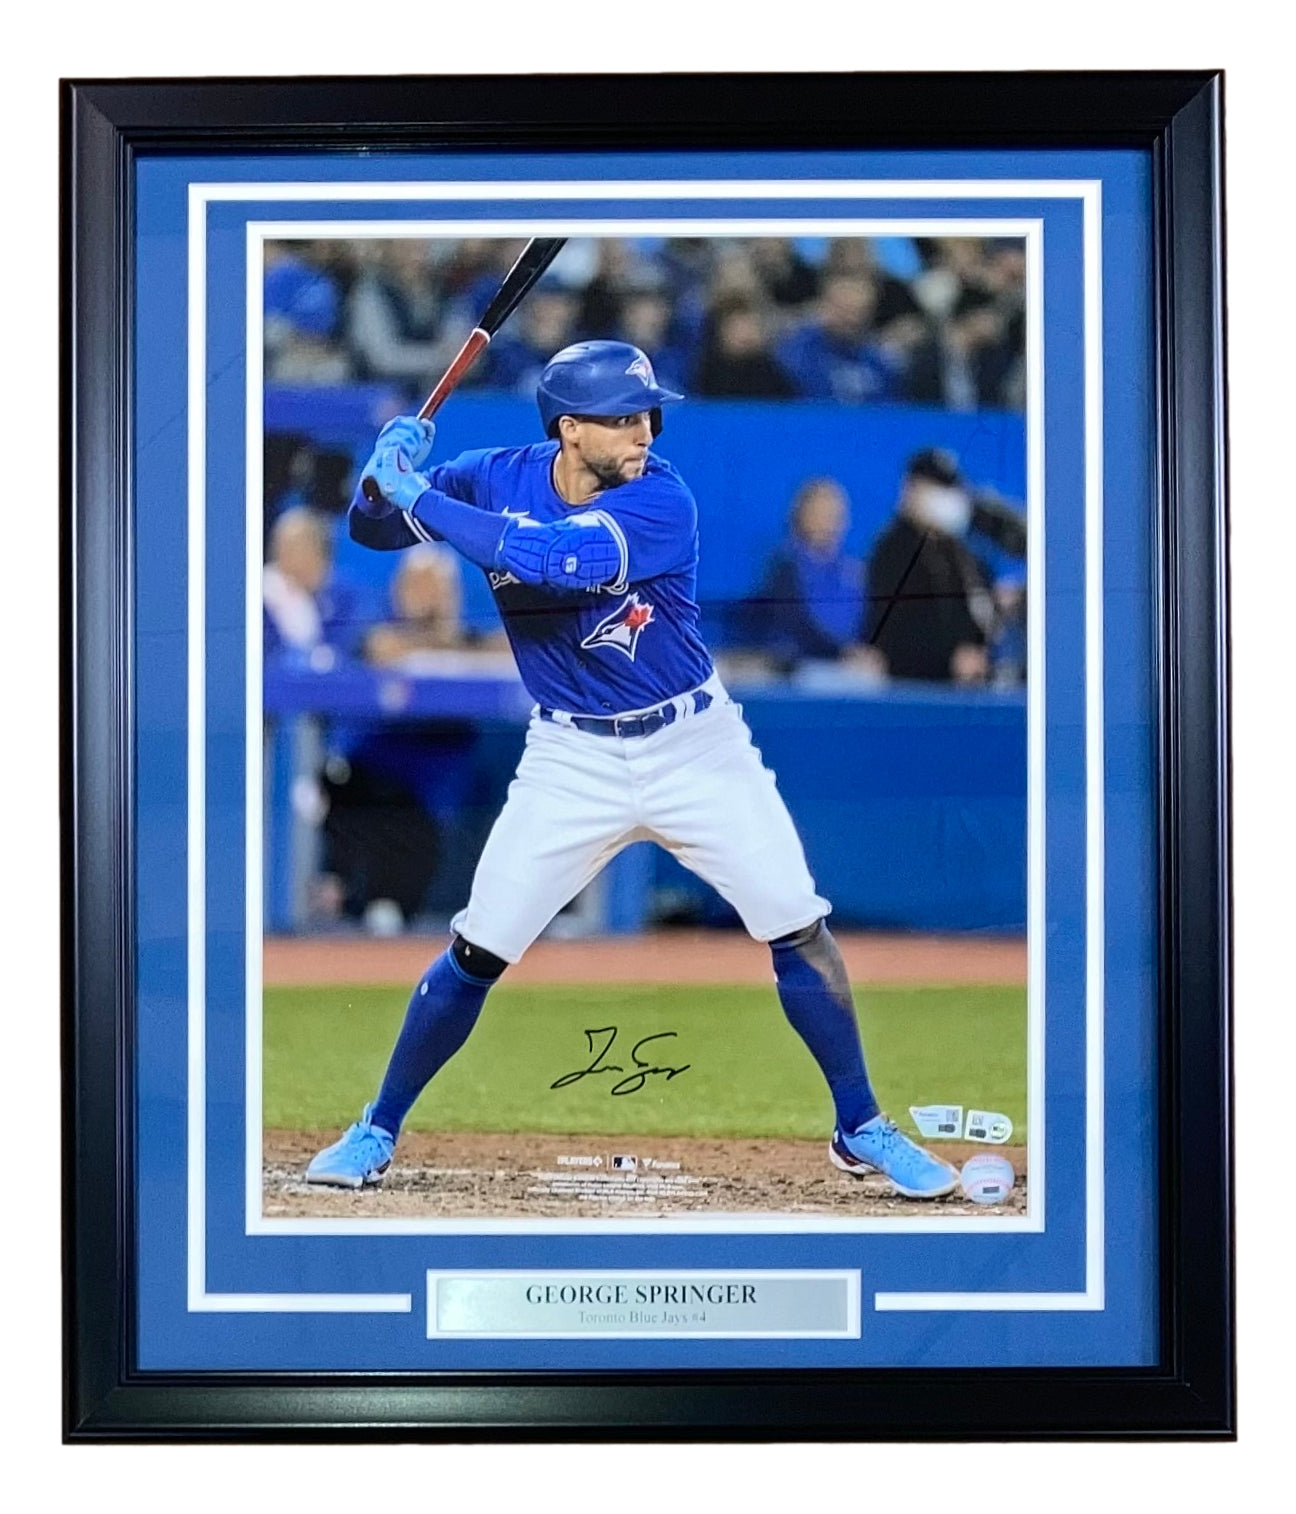 George Springer Signed Framed 16x20 Toronto Blue Jays Photo Fanatics